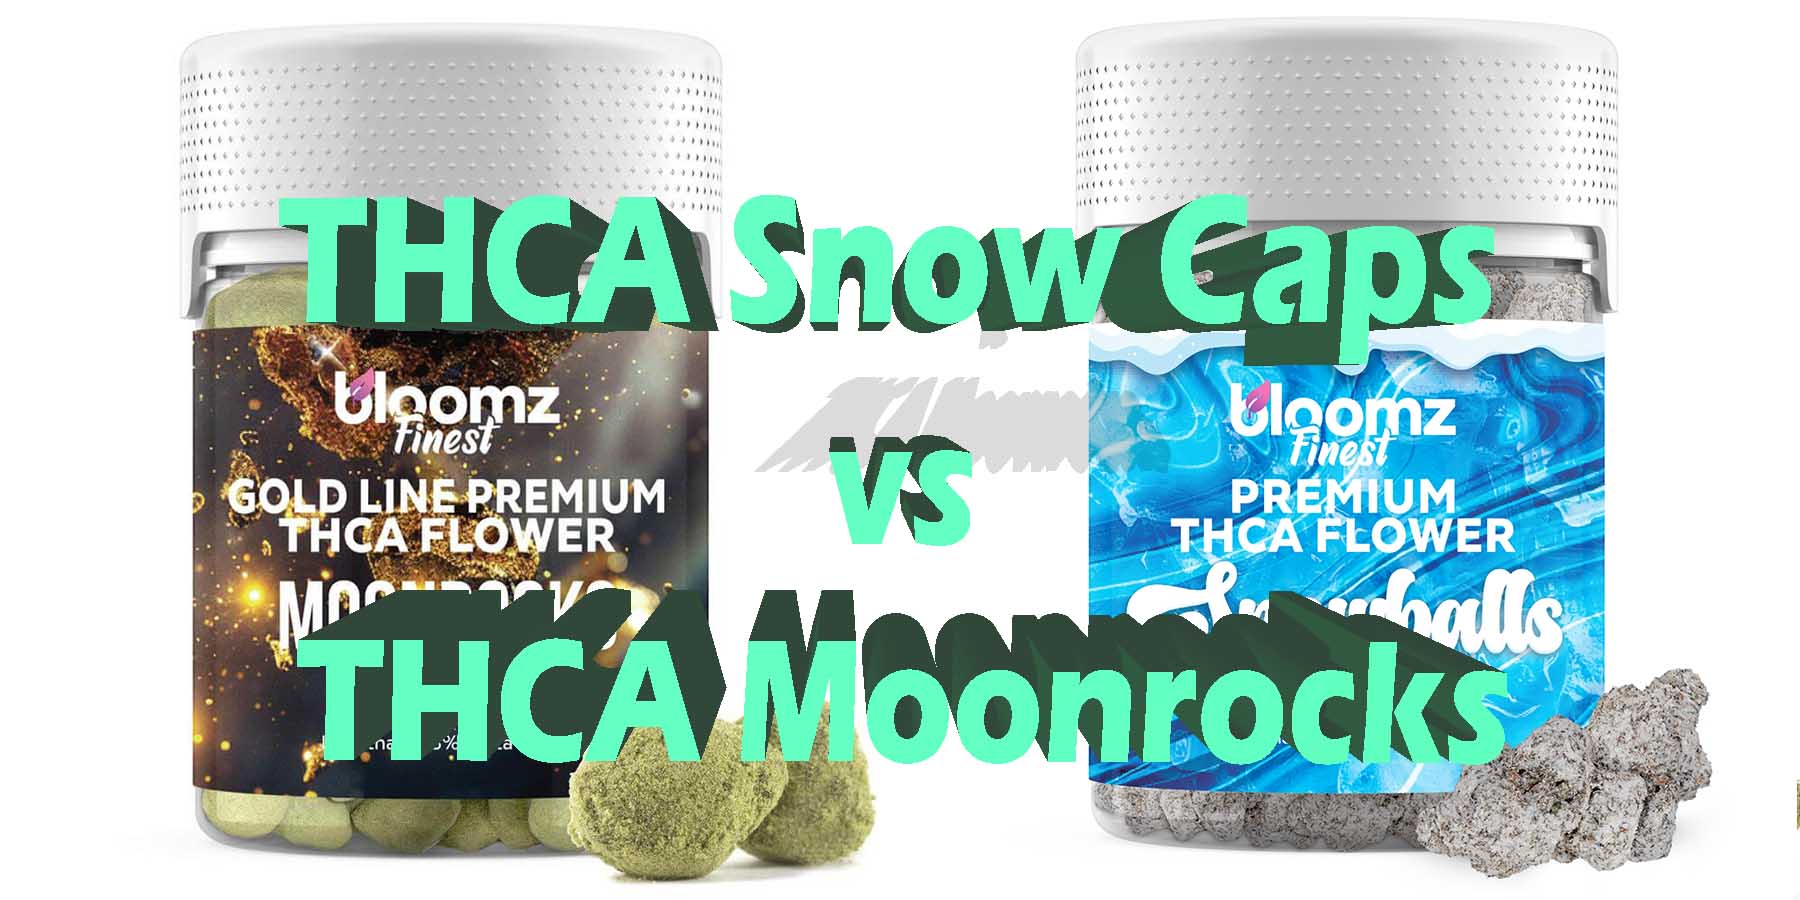 THCA Snow Caps vs THCA Moorocks WhereToGet HowToGetNearMe BestPlace LowestPrice Coupon Discount For Smoking Best High Smoke Shop Online Near Me Binoid